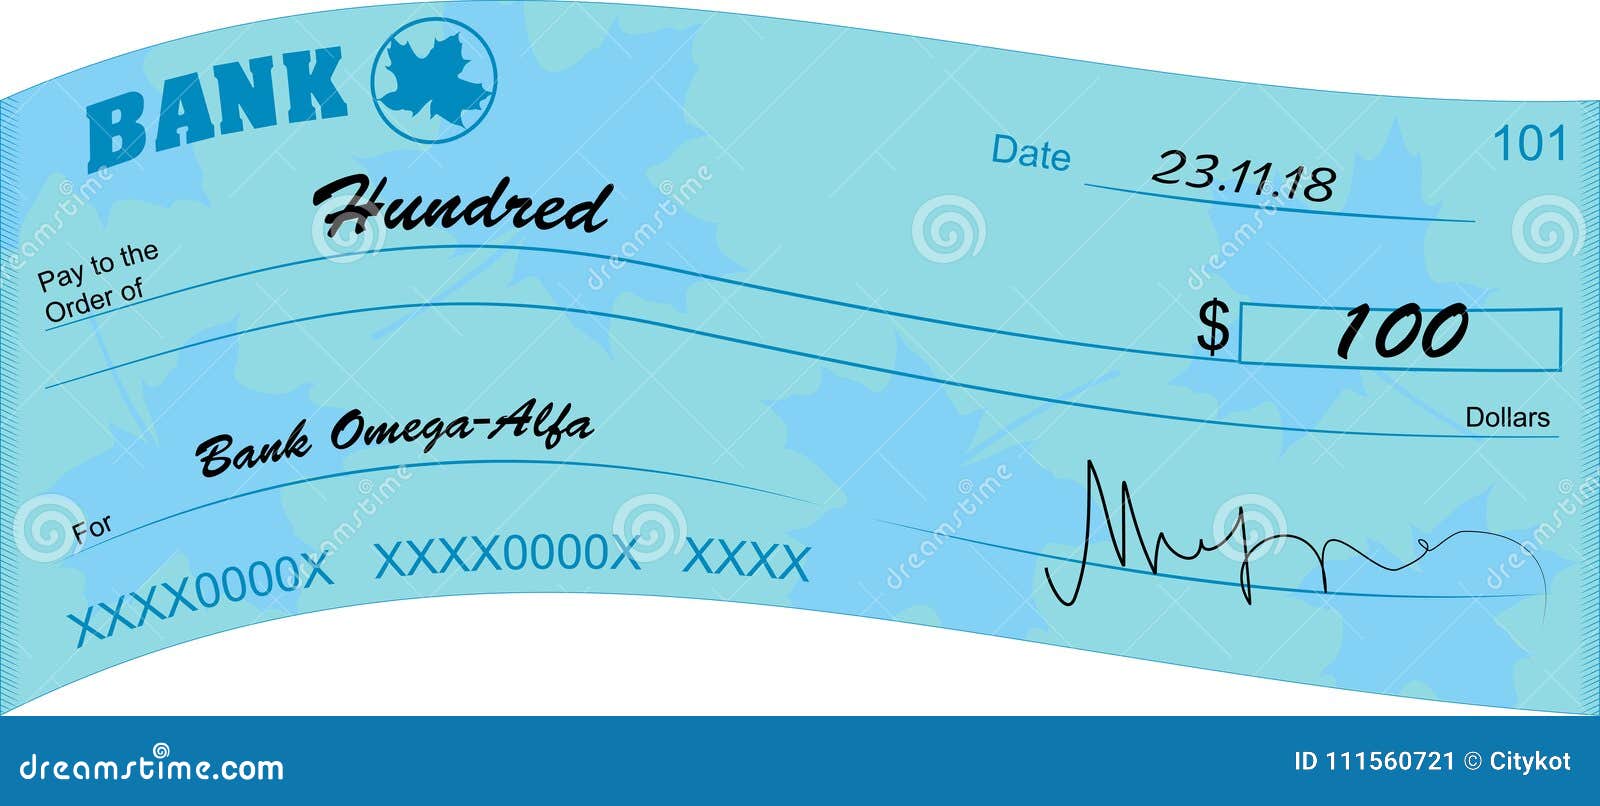 Bank check stock illustration. Illustration of cheque - 111560721